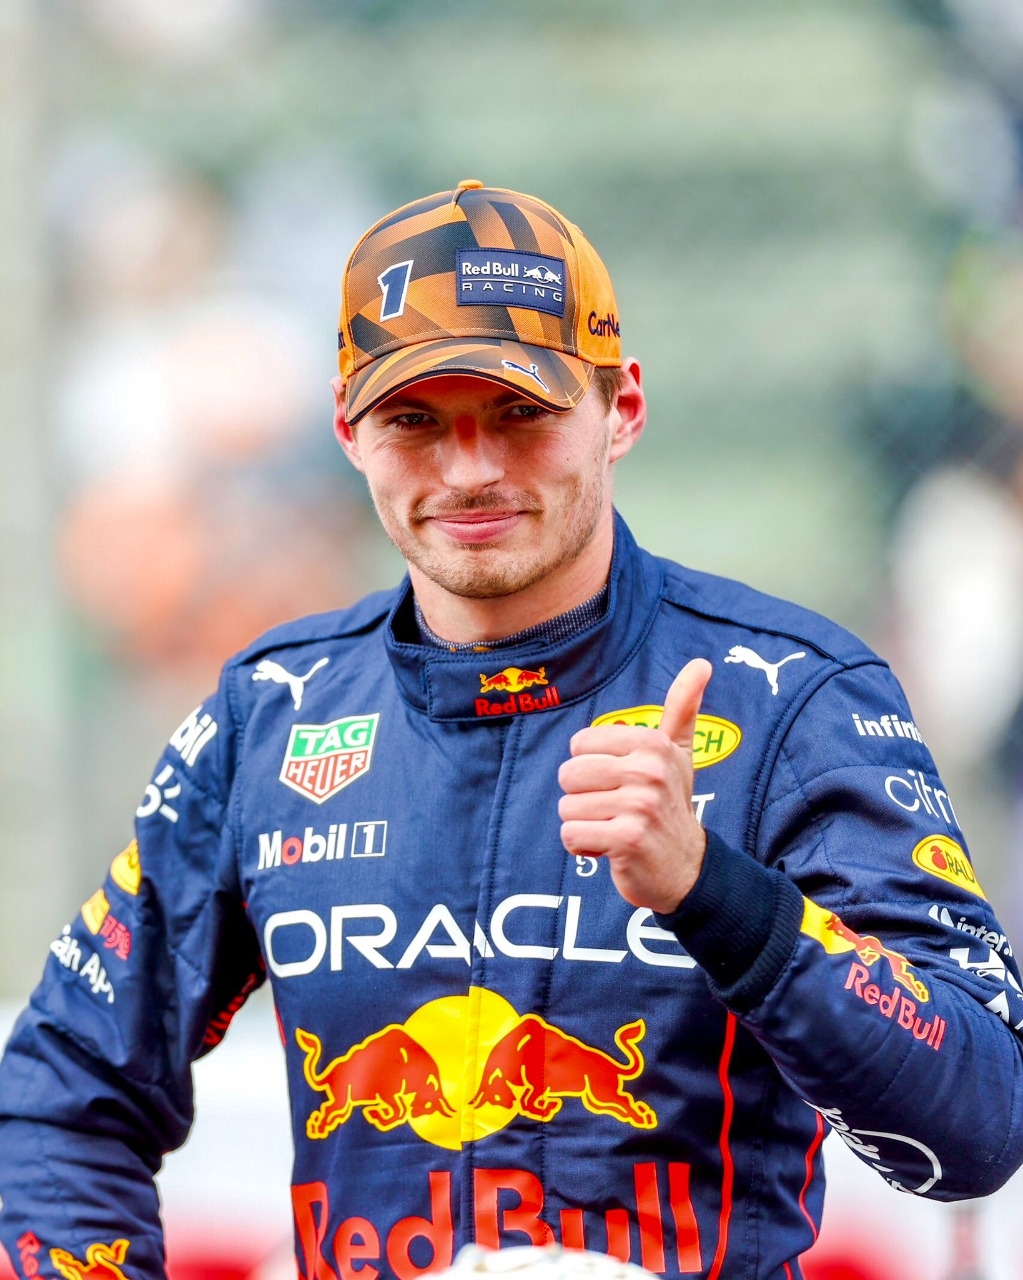  Formula 1: Verstappen Beats Alonso To Win Monaco Gp Despite Late Drama Caused By-TeluguStop.com